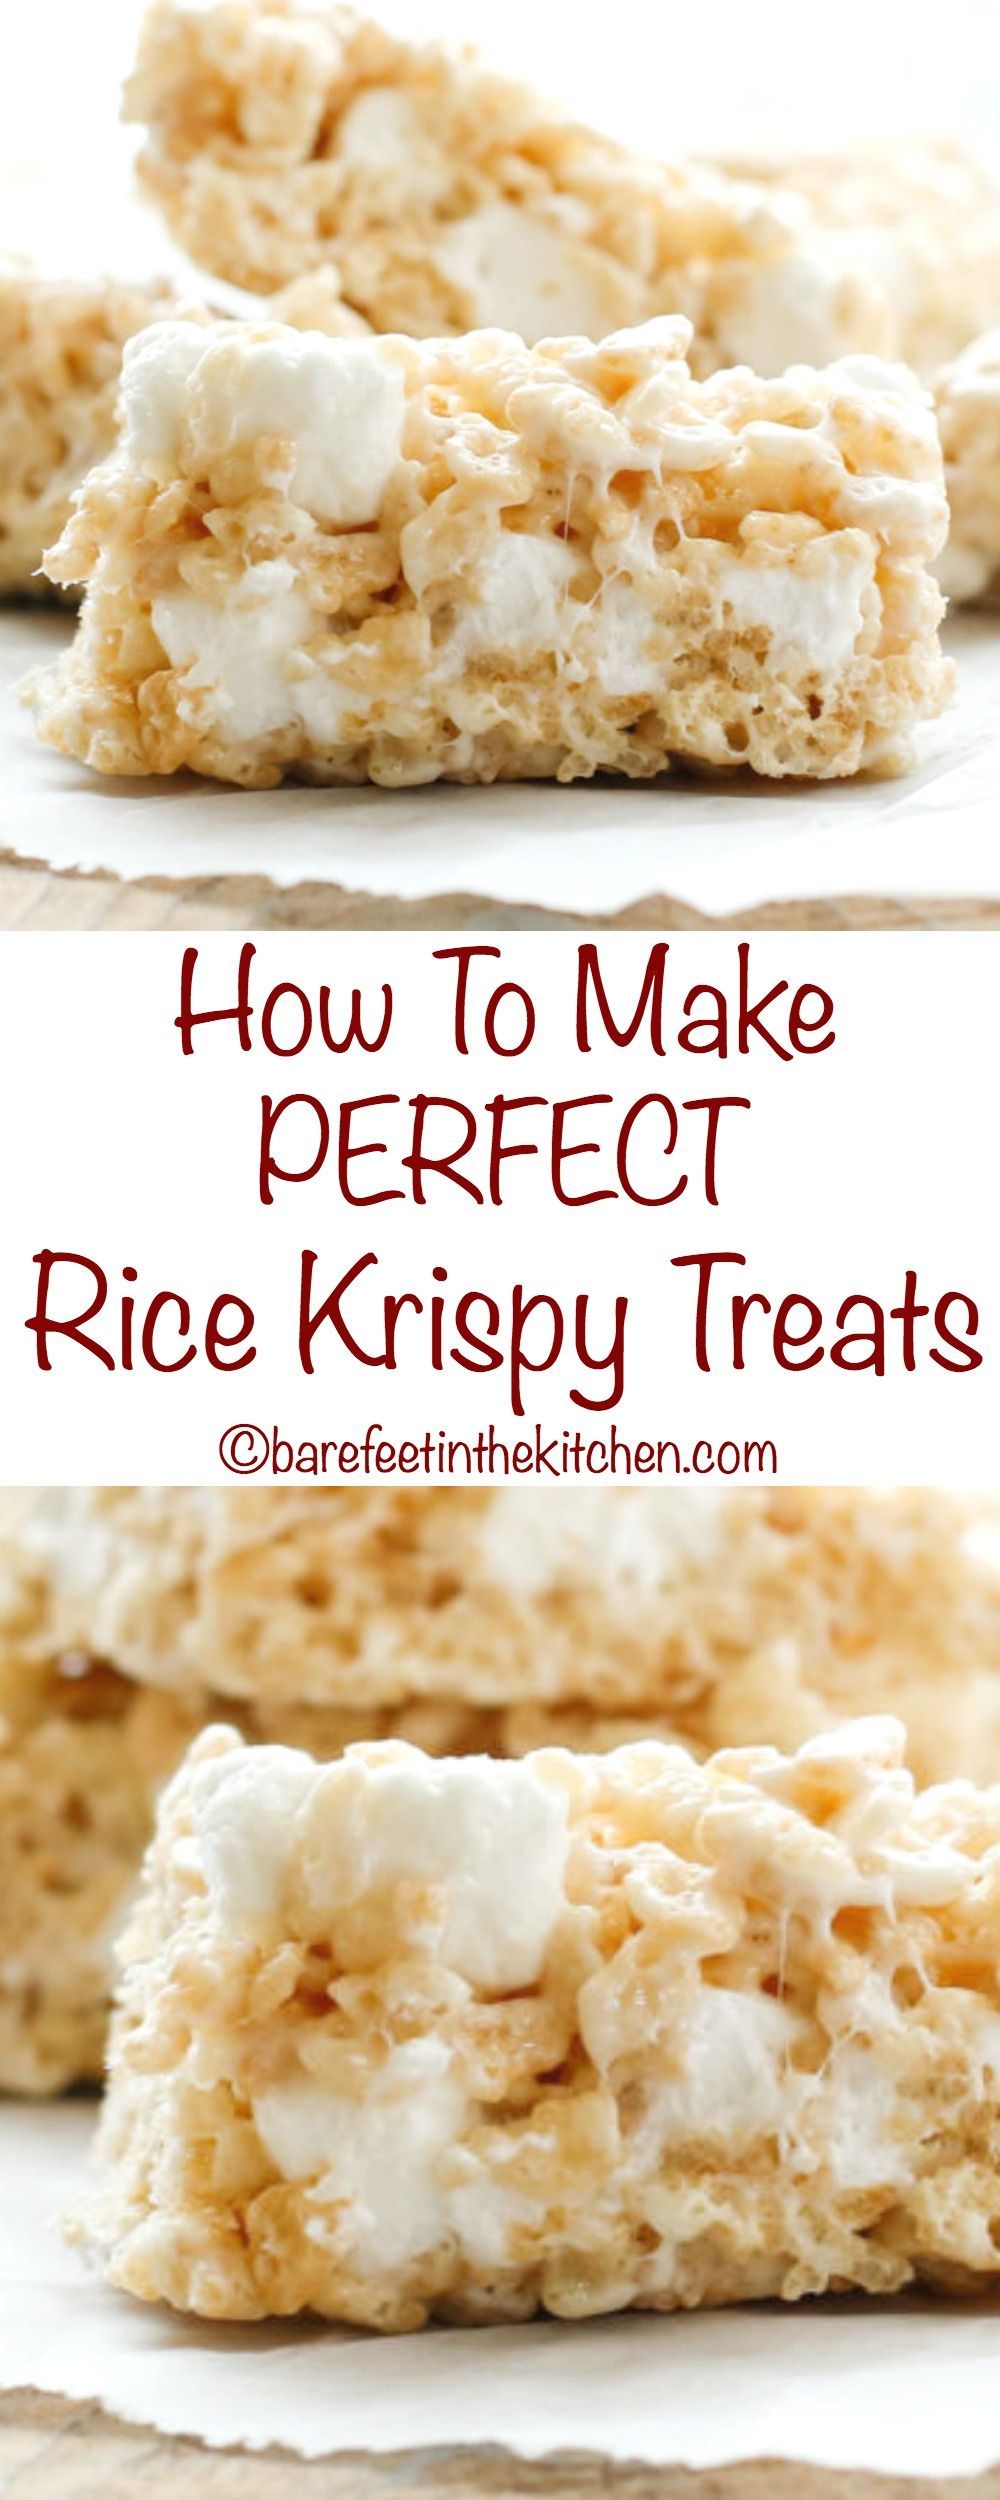 How To Make PERFECT Rice Krispy Treats – get the recipe at barefeetinthekitchen.com